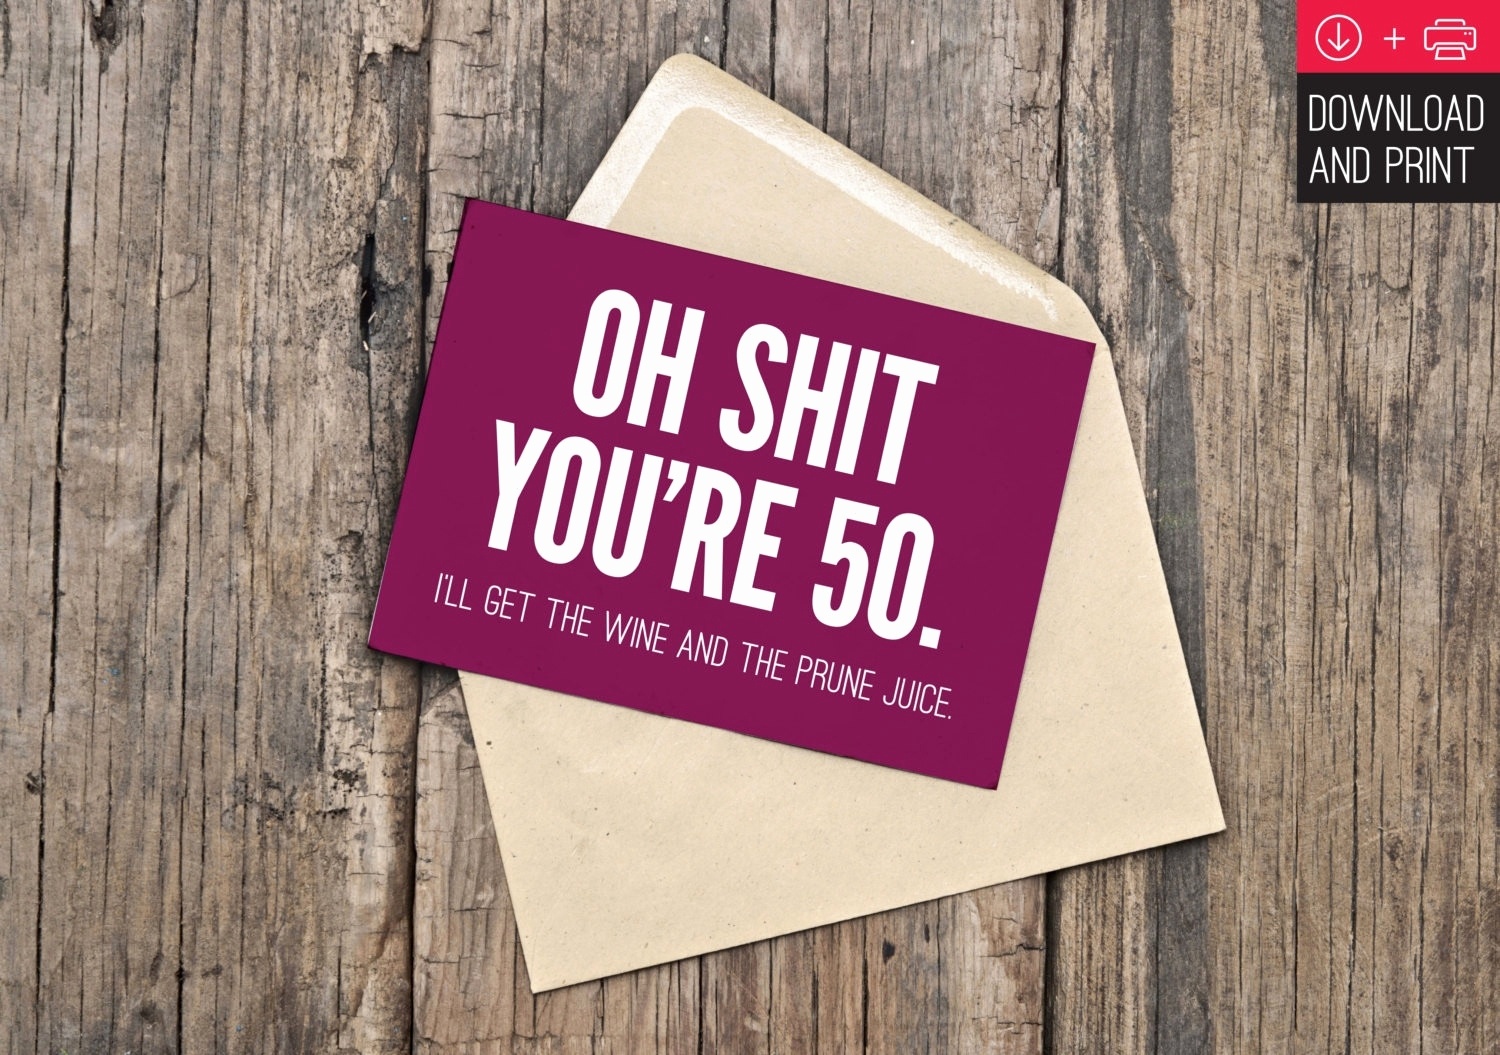 free-printable-50th-birthday-cards-funny-free-printable